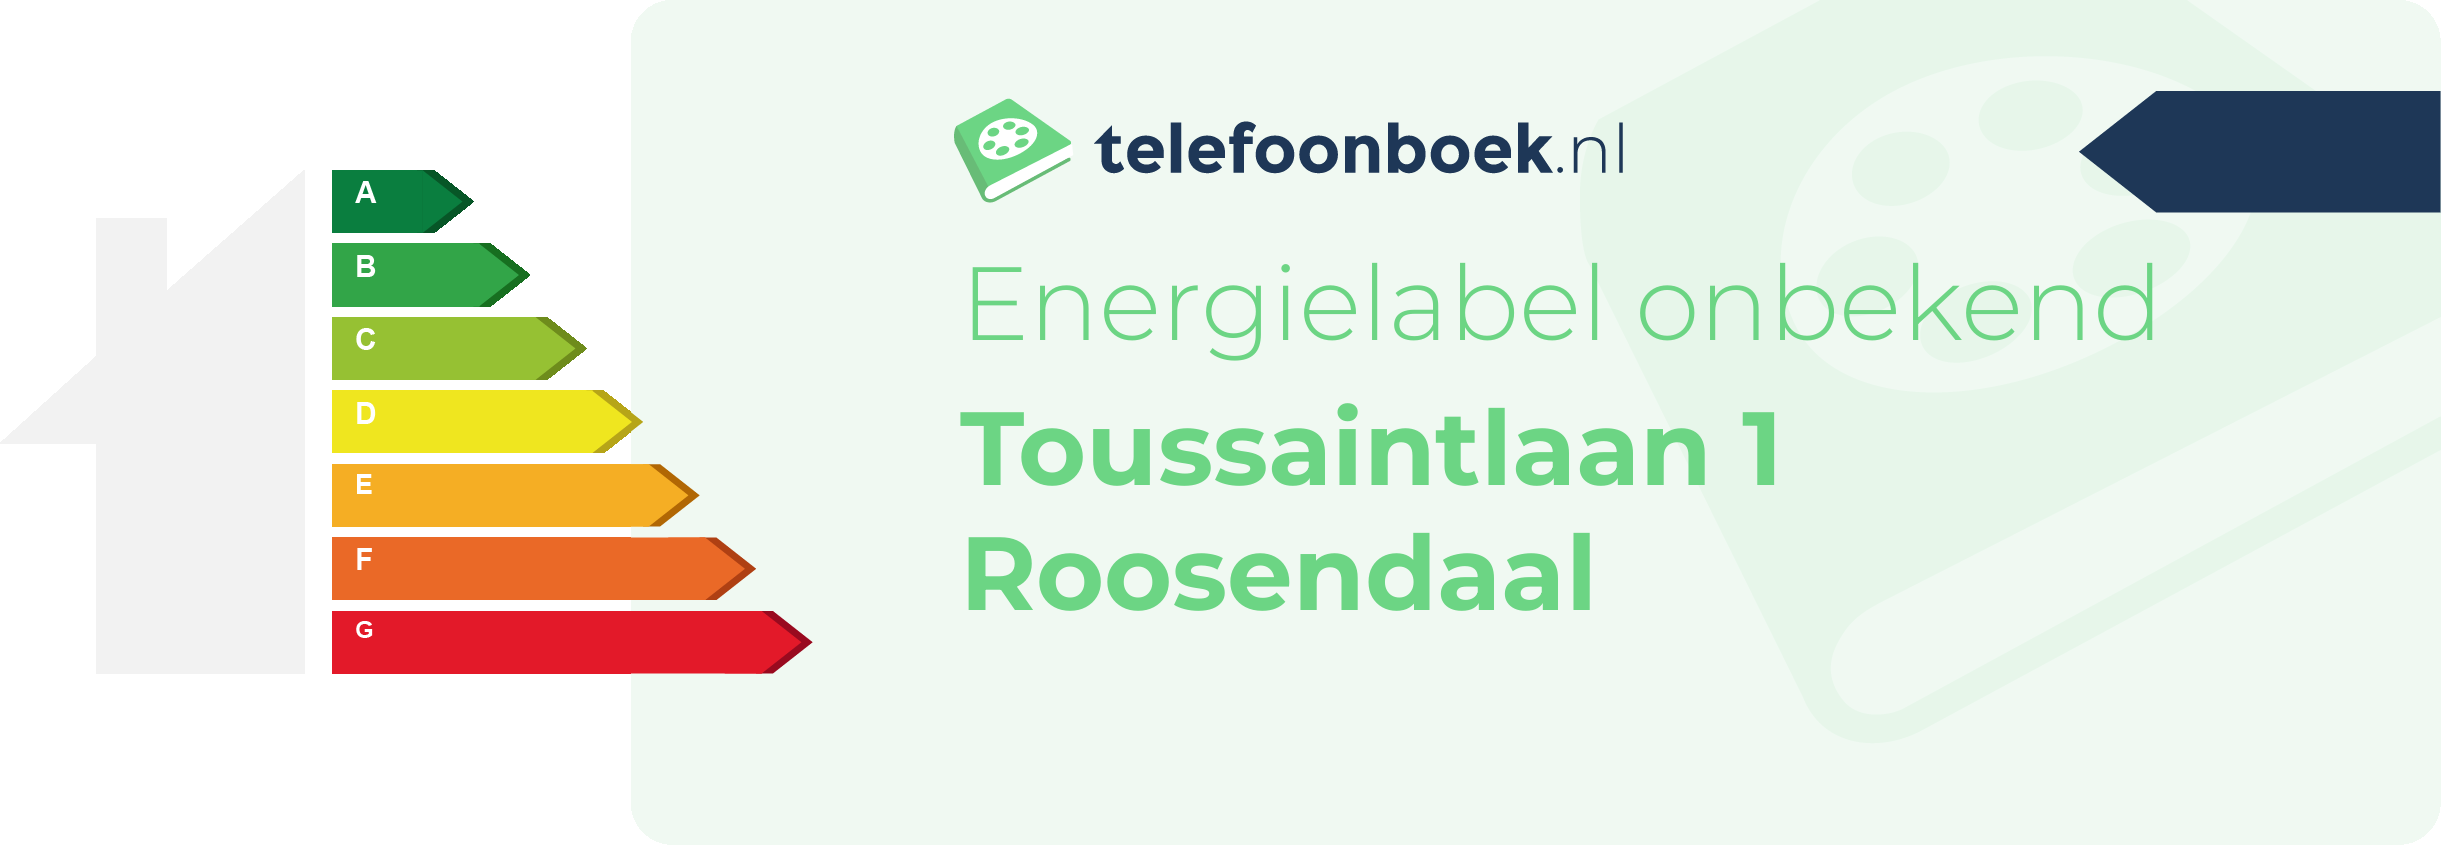 Energielabel Toussaintlaan 1 Roosendaal